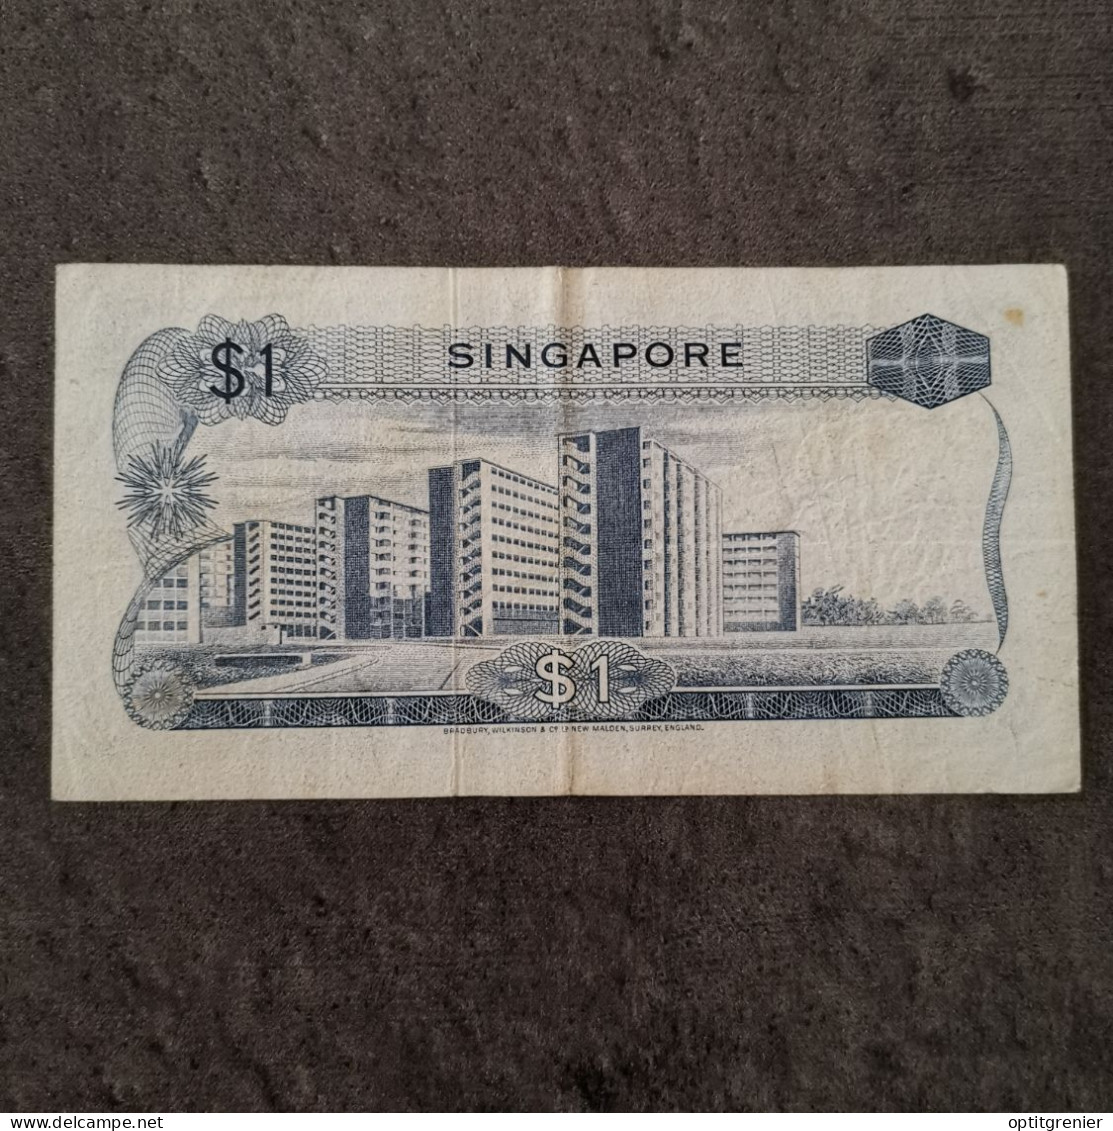 BILLET CIRCULE 1 DOLLAR 1972 SINGAPOUR / SINGAPORE BANKNOTE - Singapore